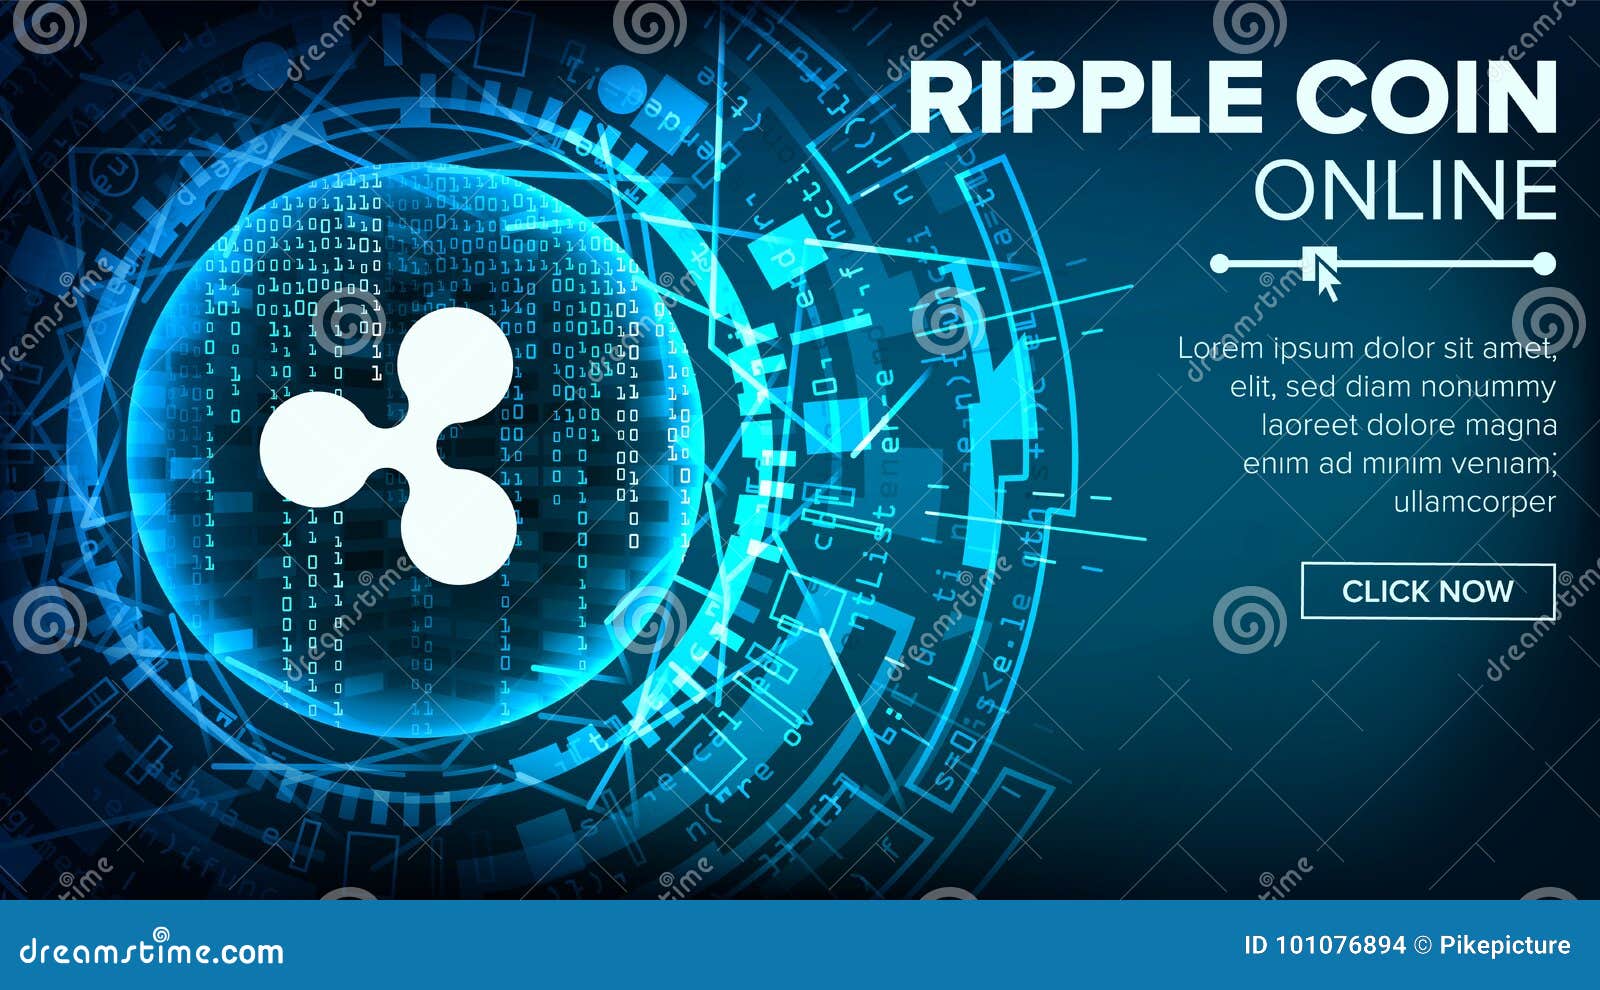 ripple crypto code